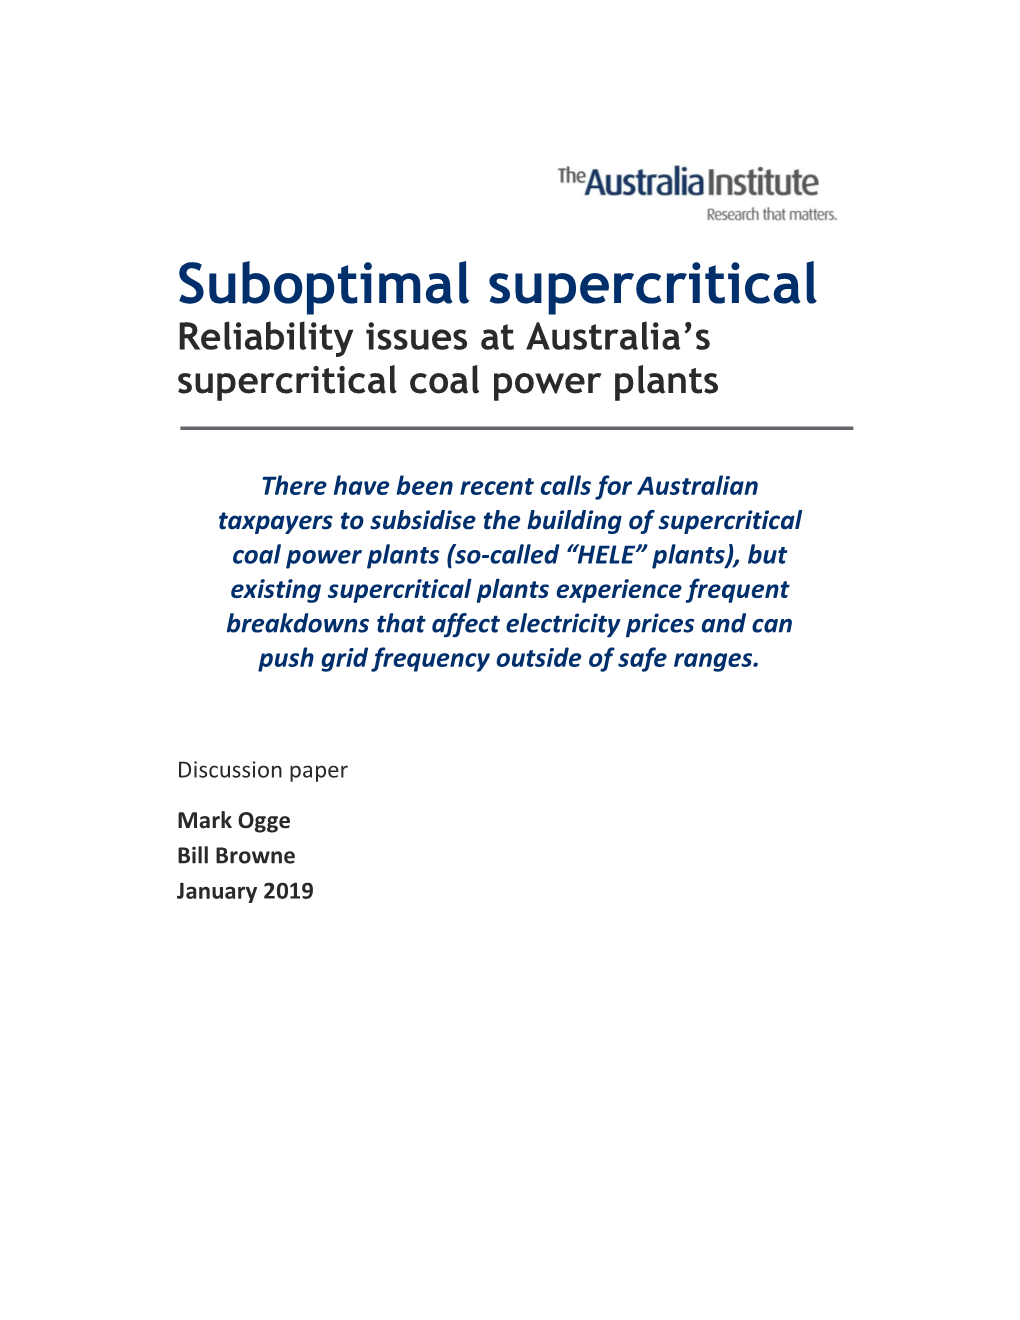 Suboptimal Supercritical Reliability Issues at Australia’S Supercritical Coal Power Plants